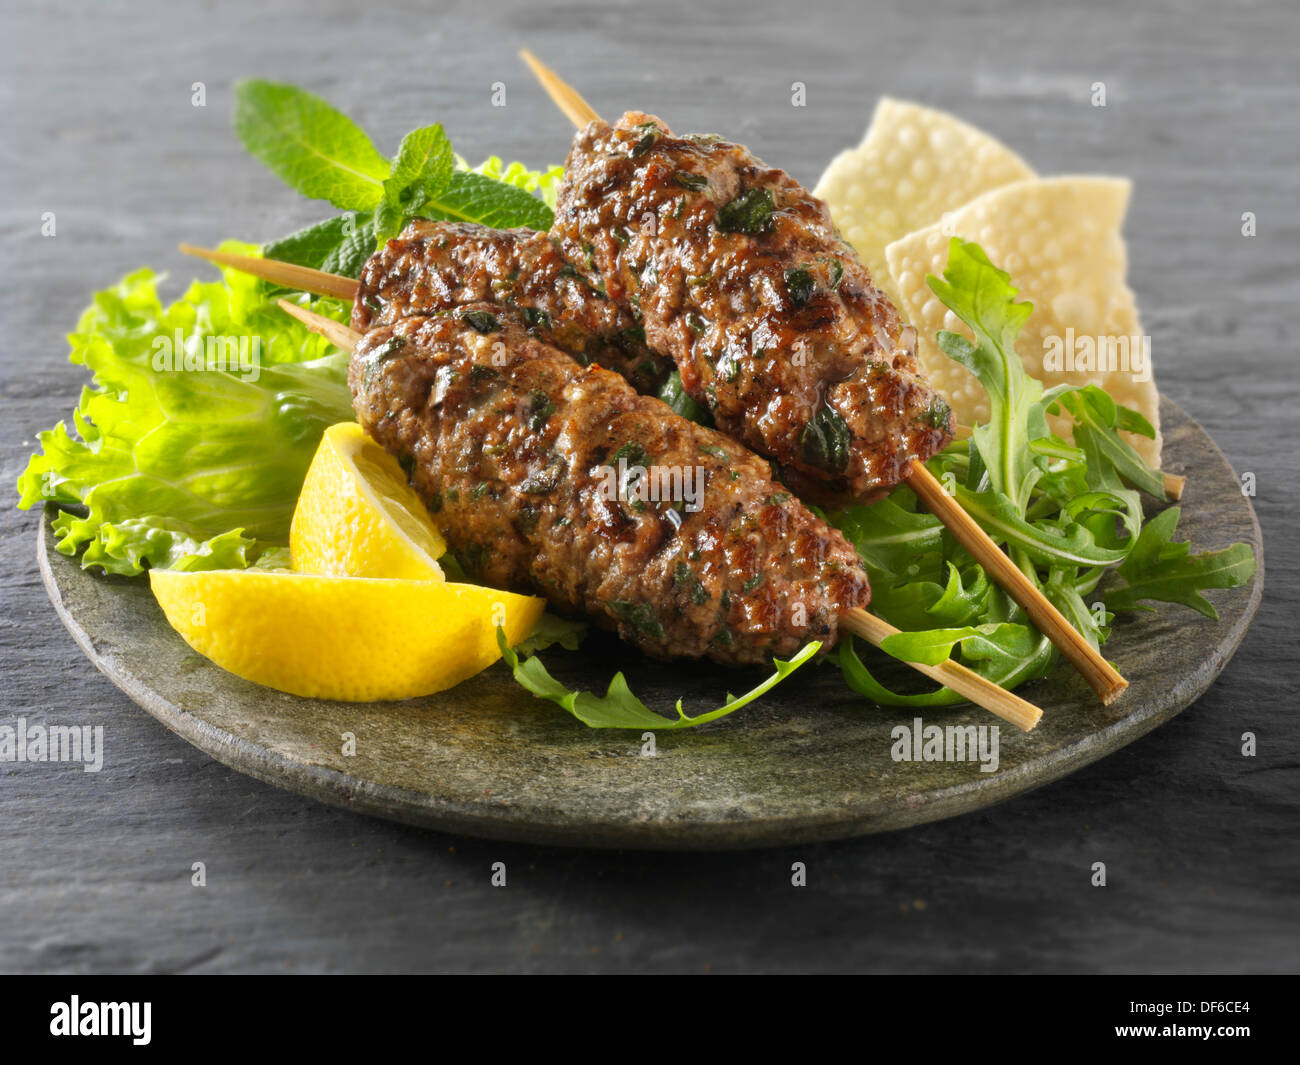 Kofte Kebab with salad & lemnon wedges Stock Photo